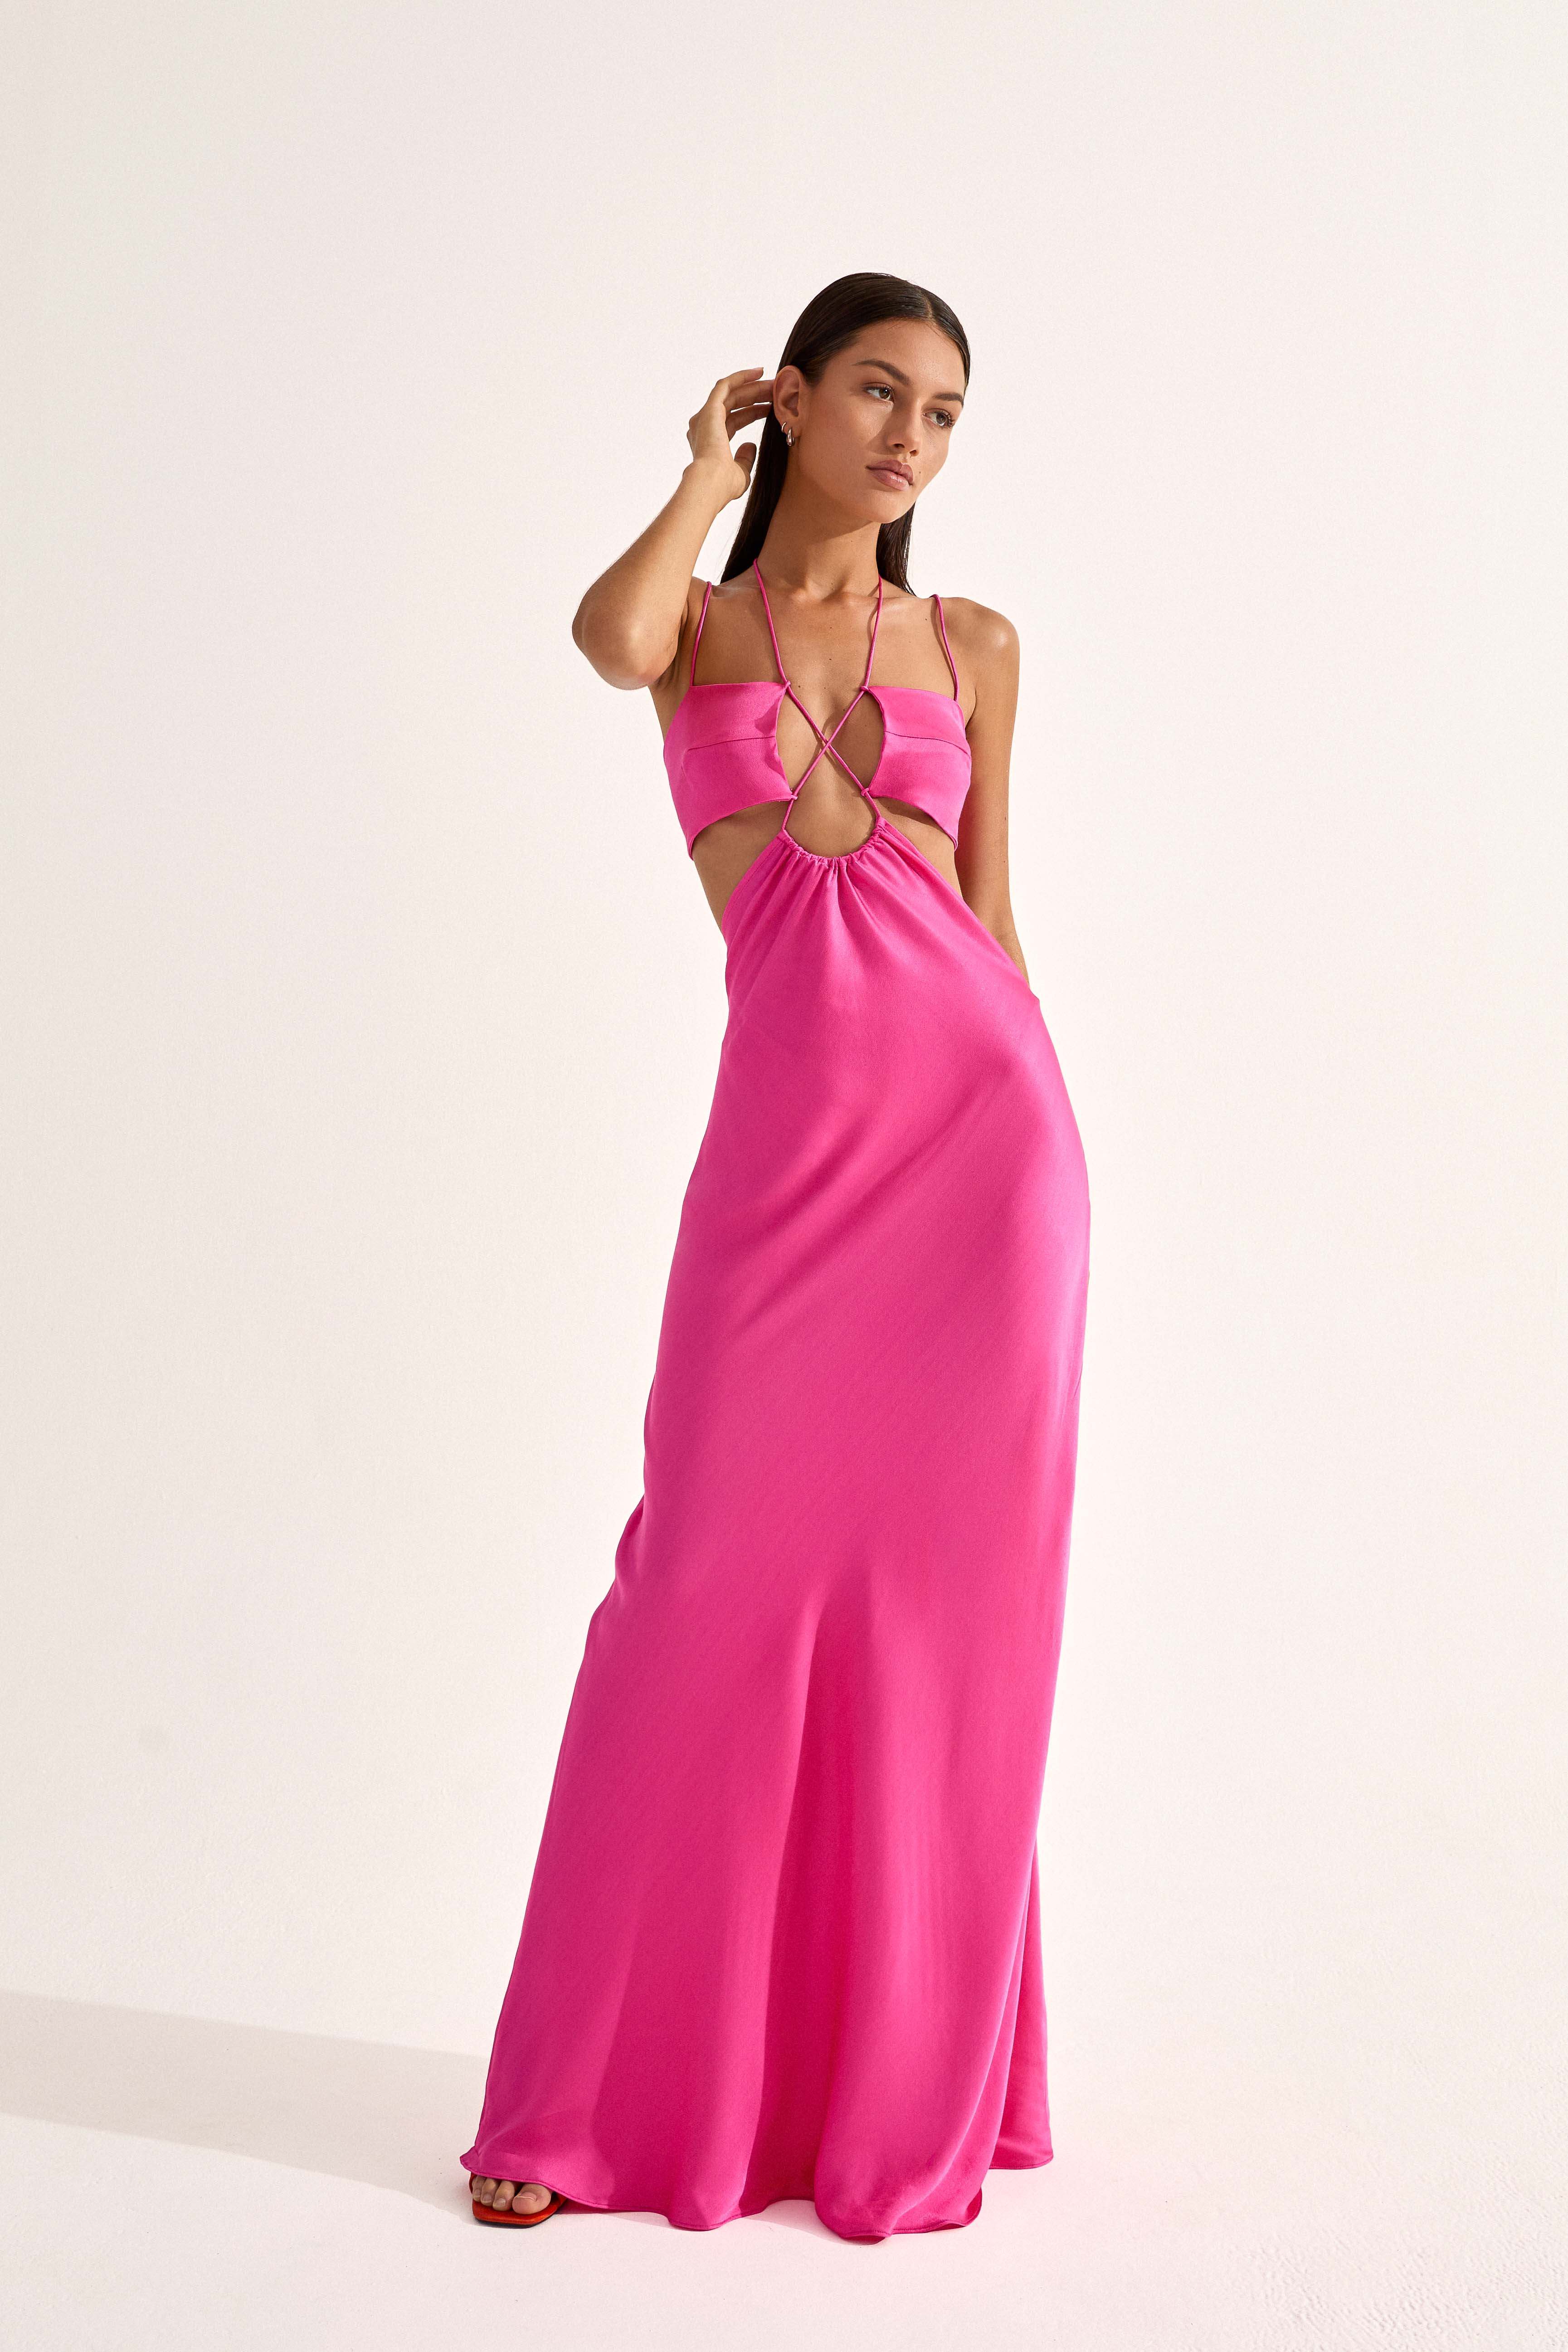 'Storm' Cut Out Maxi Dress - Hot Pink